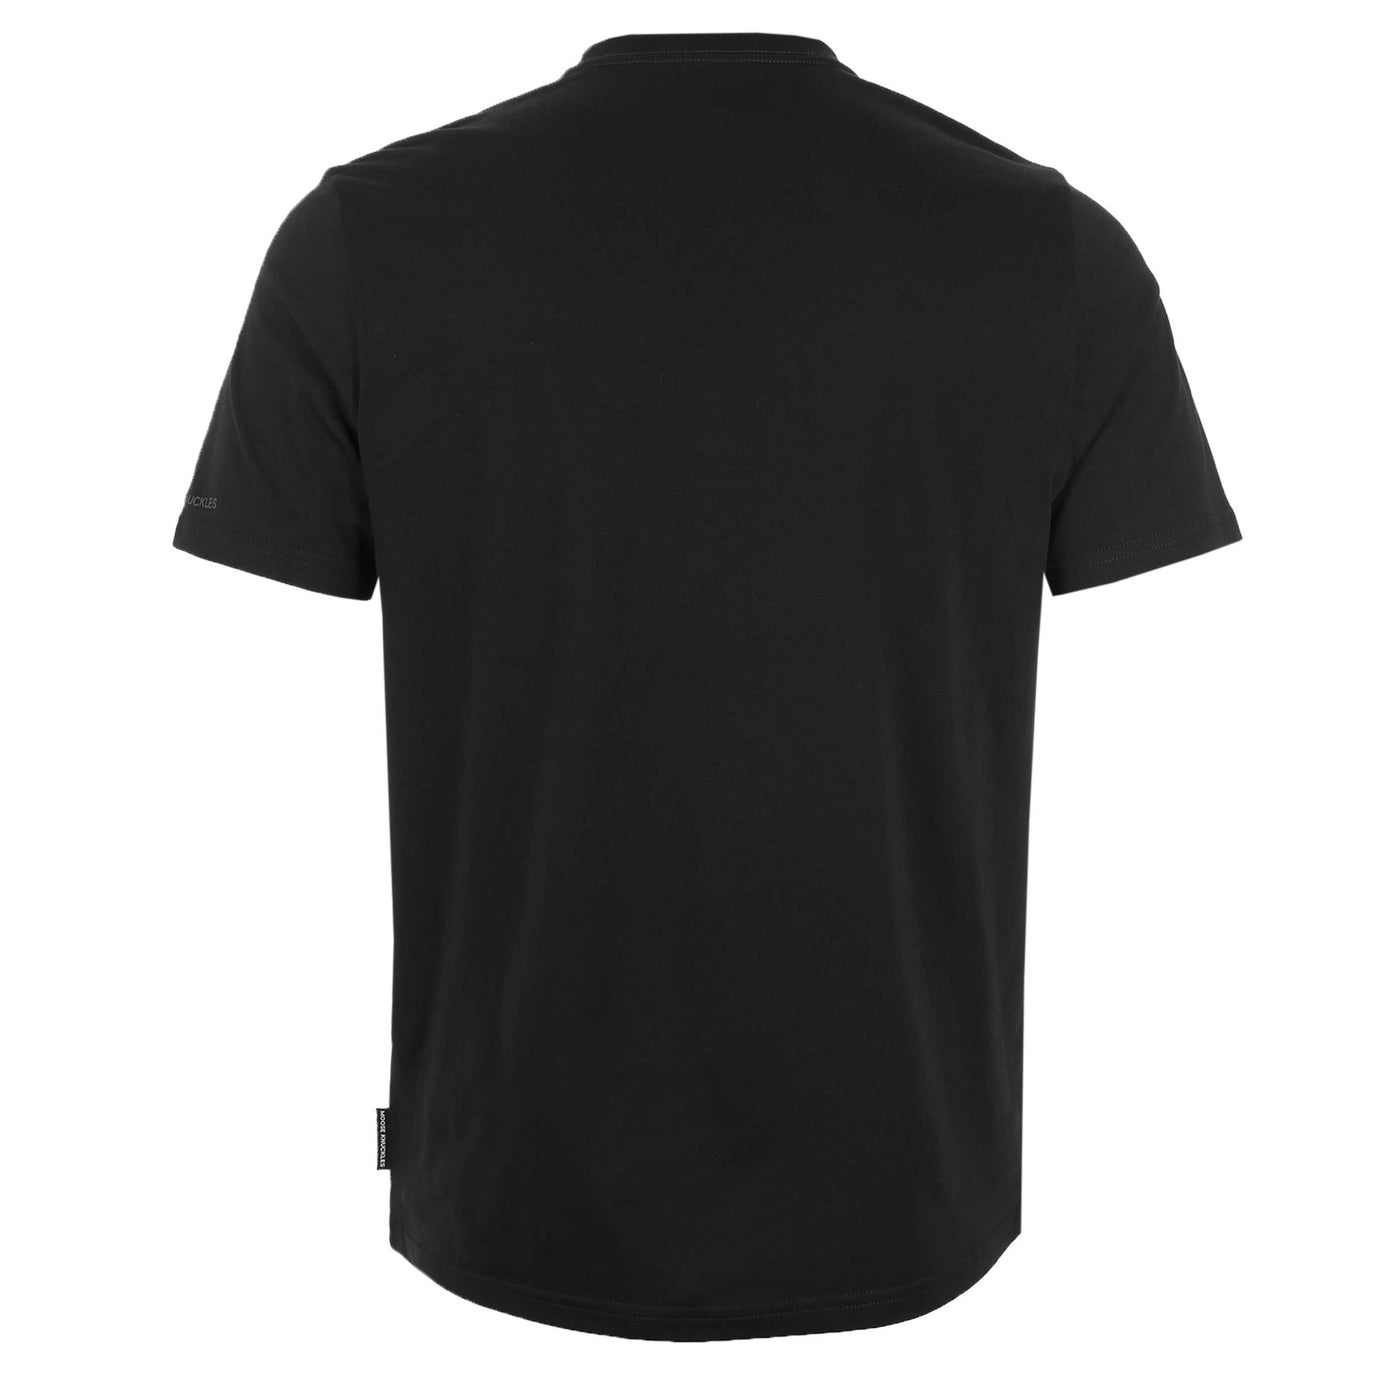 Moose Knuckles Chamblee T-Shirt in Black Back